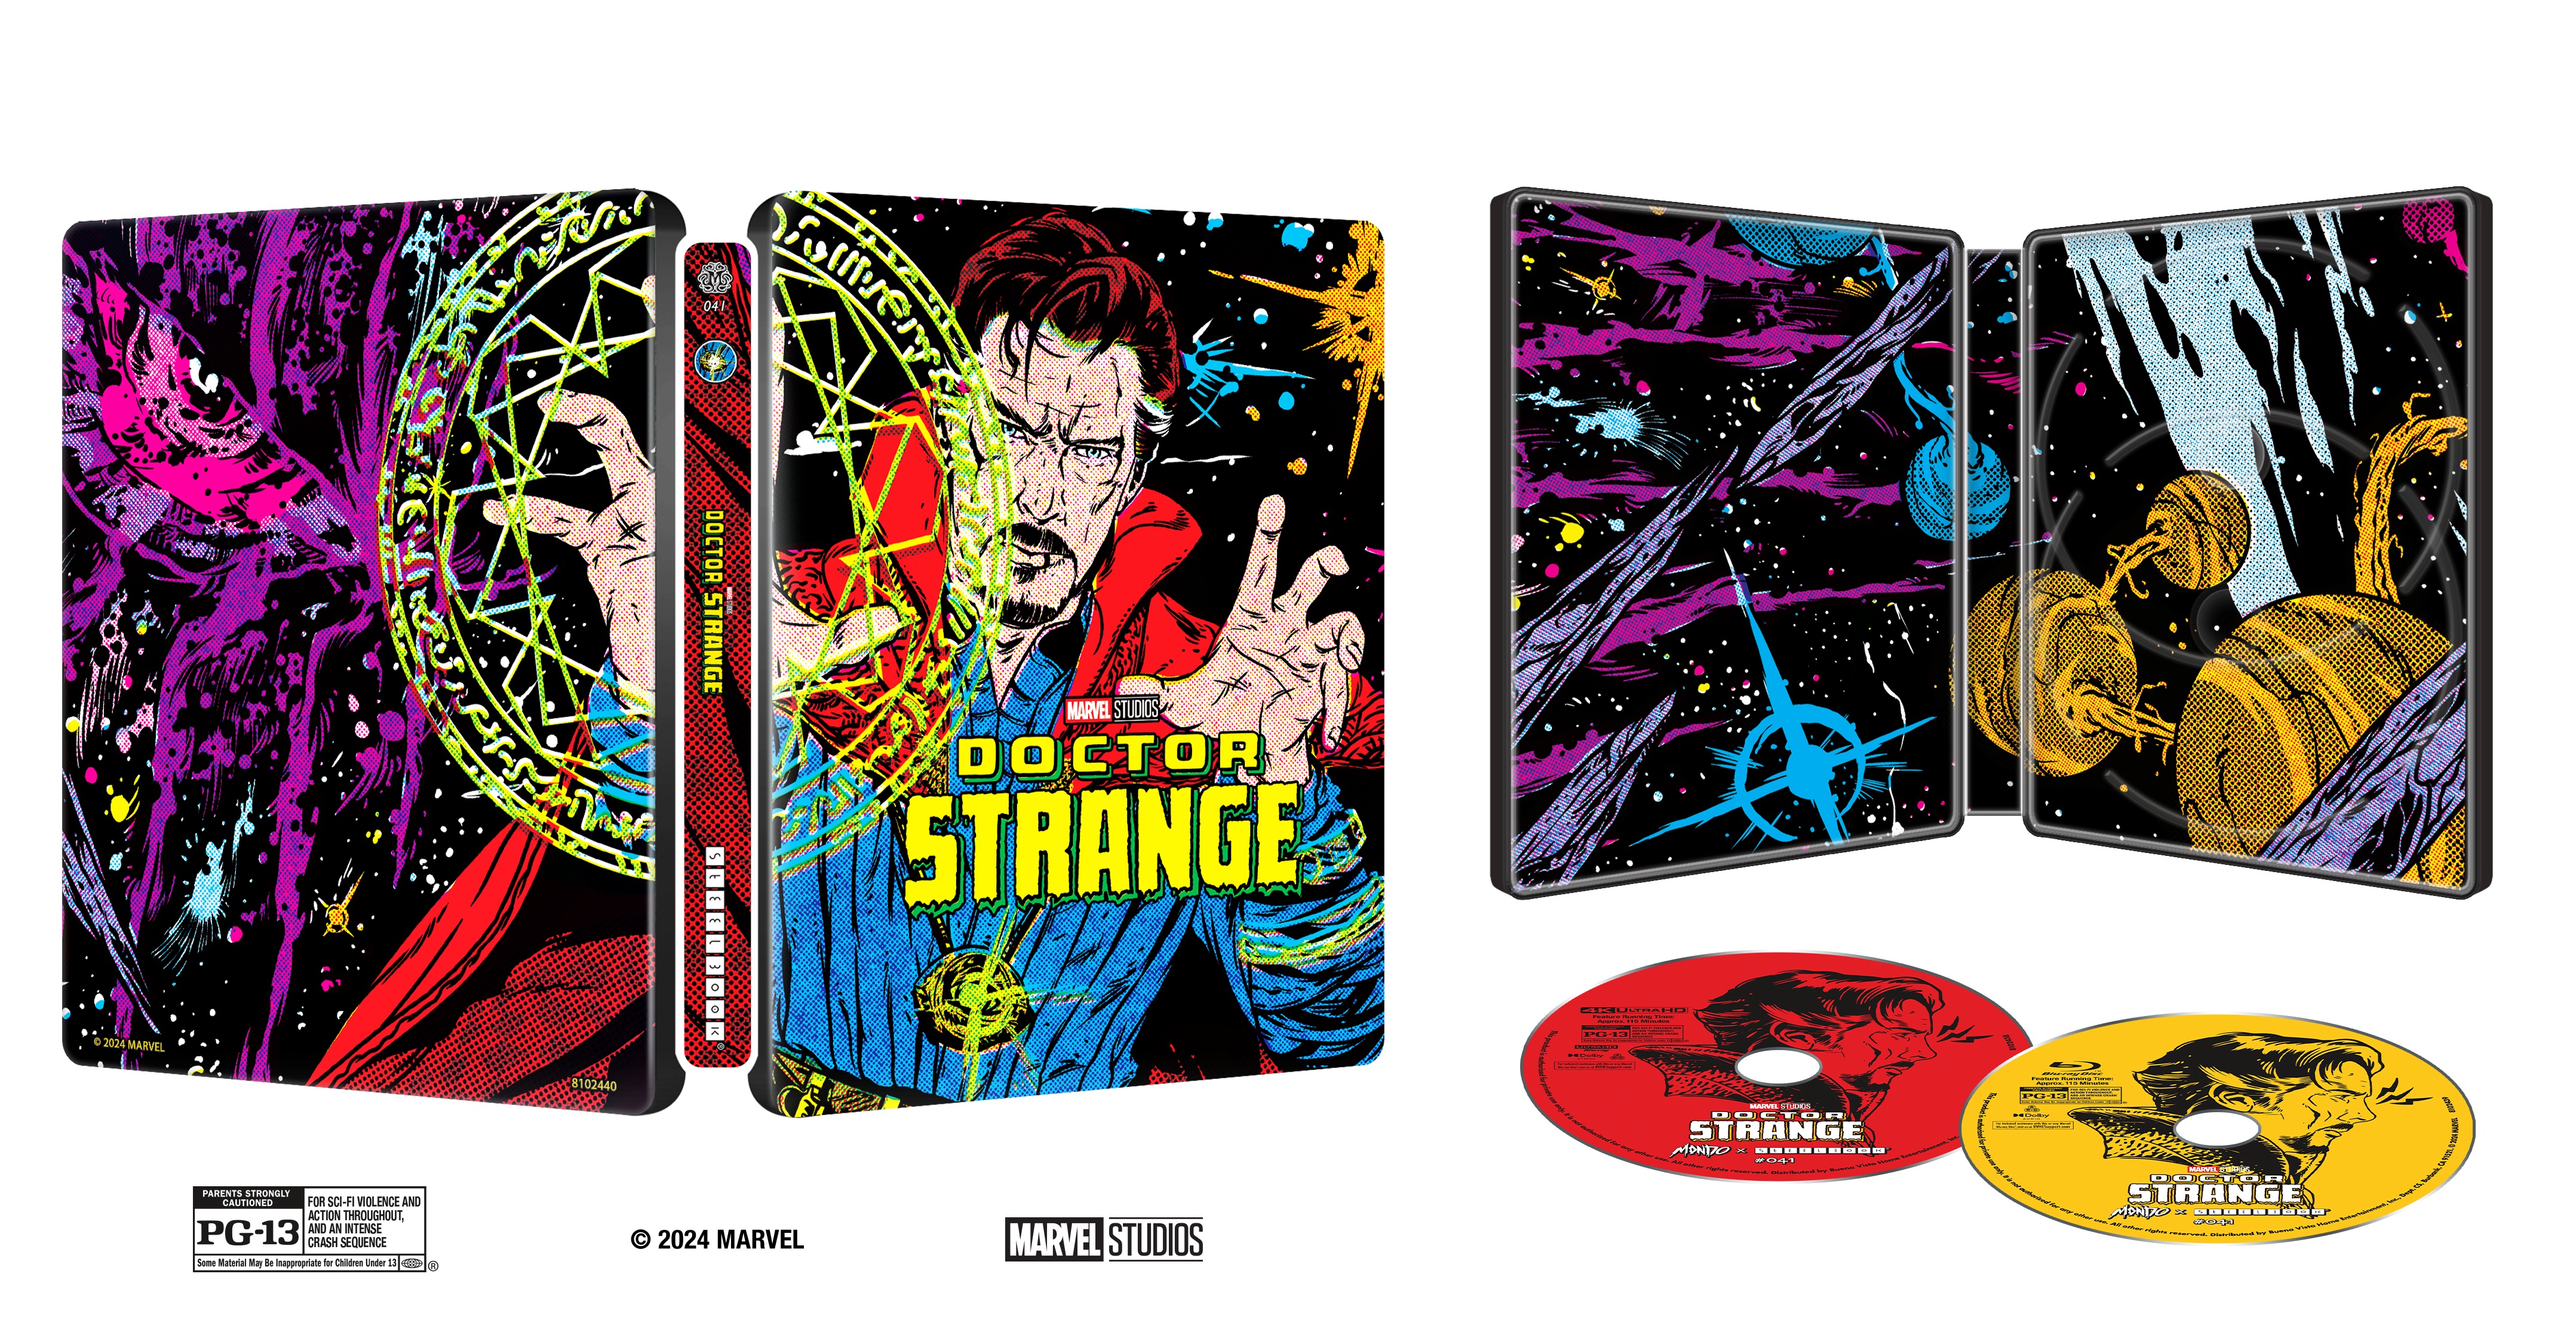 Doctor Strange Walmart Exclusive Mondo Steelbook (4K Ultra HD + Blu-ray + Digital Code) - image 2 of 3